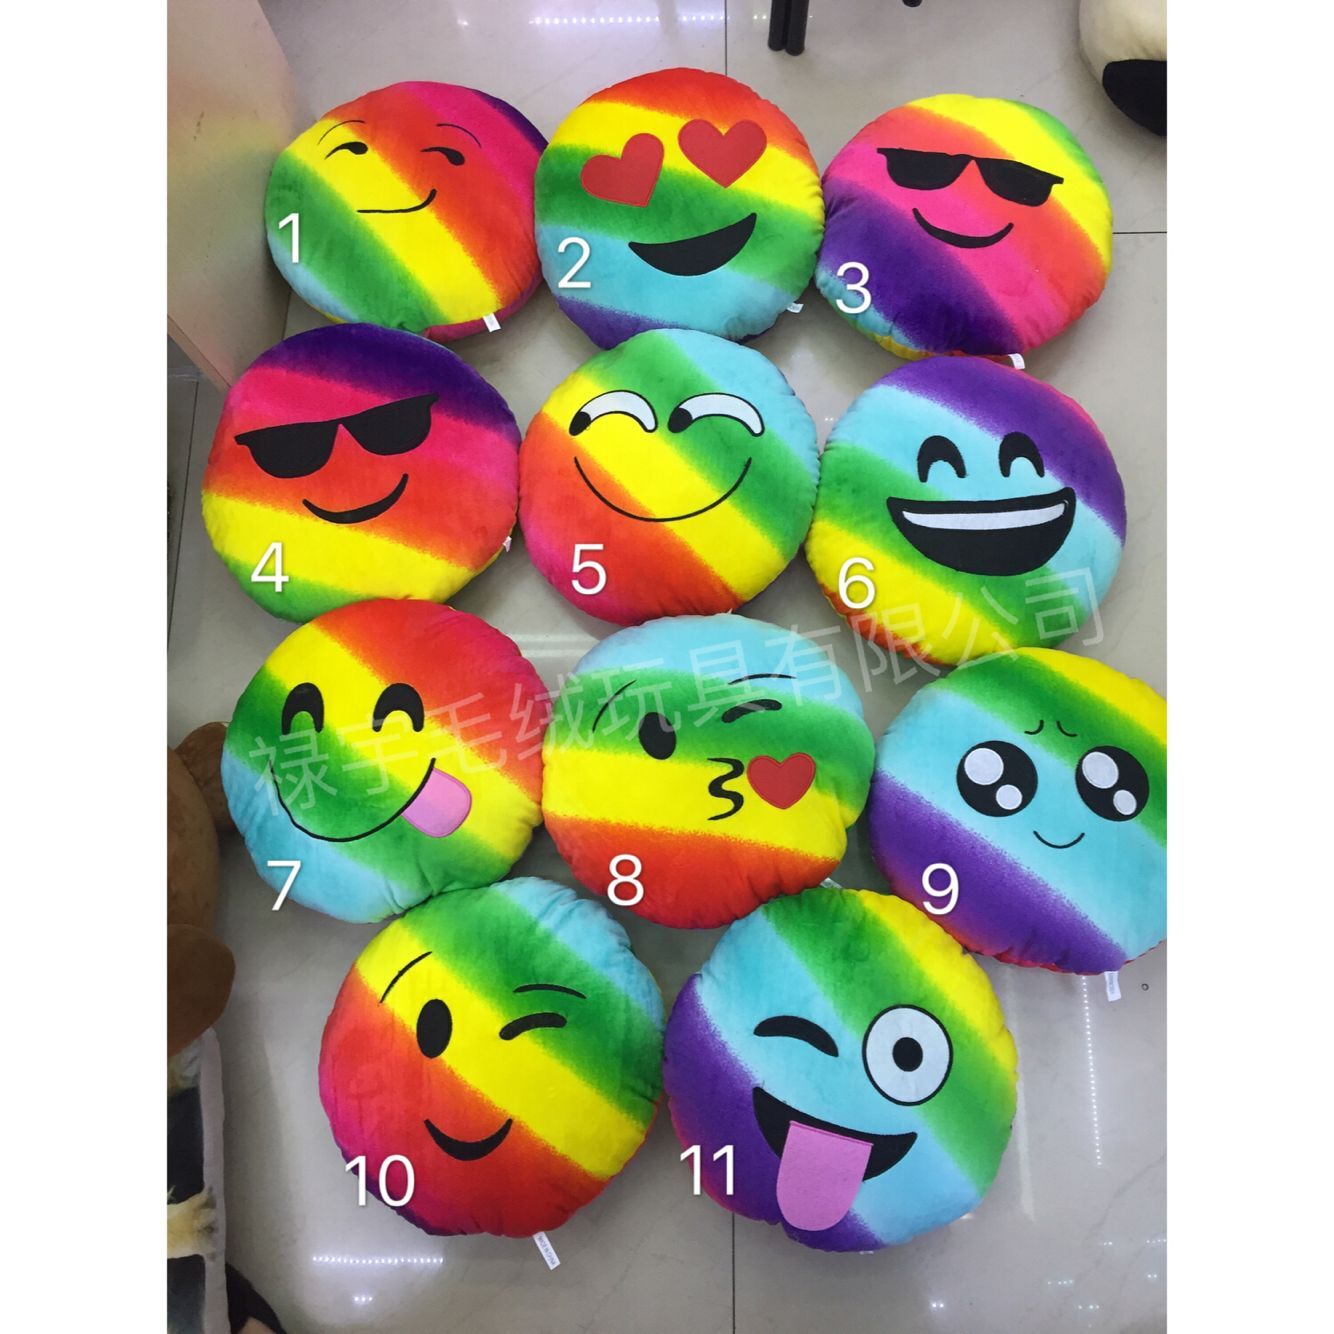 rainbow poop emoji plush